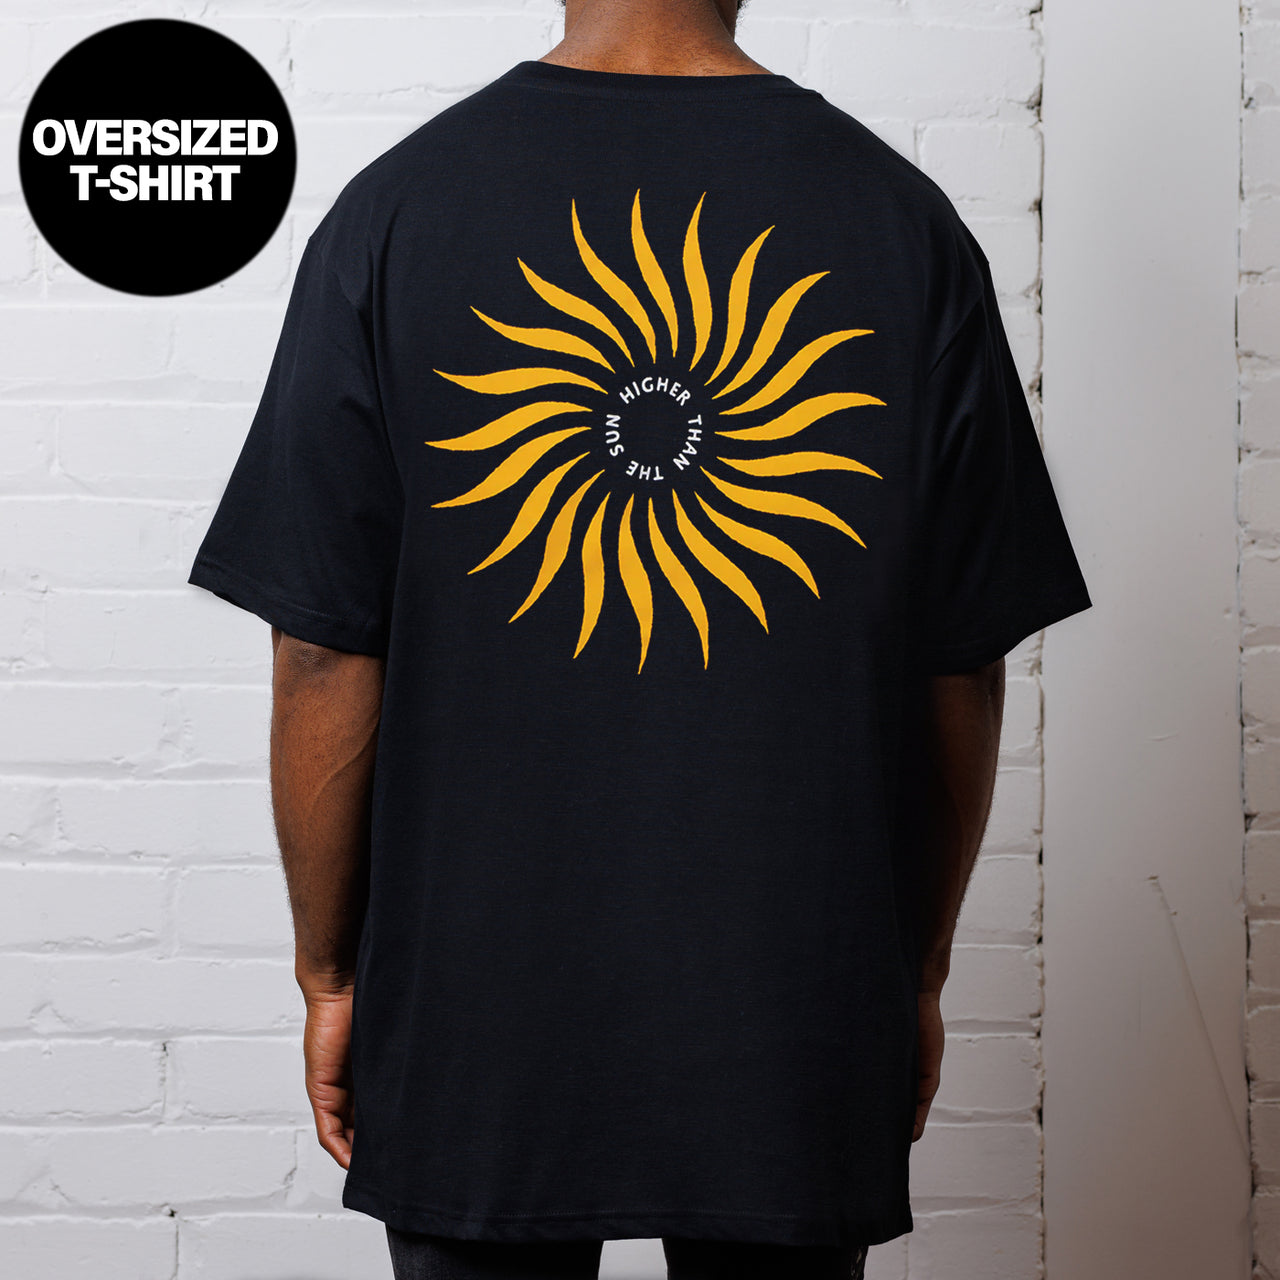 Higher Than The Sun - Oversized Tshirt - Black